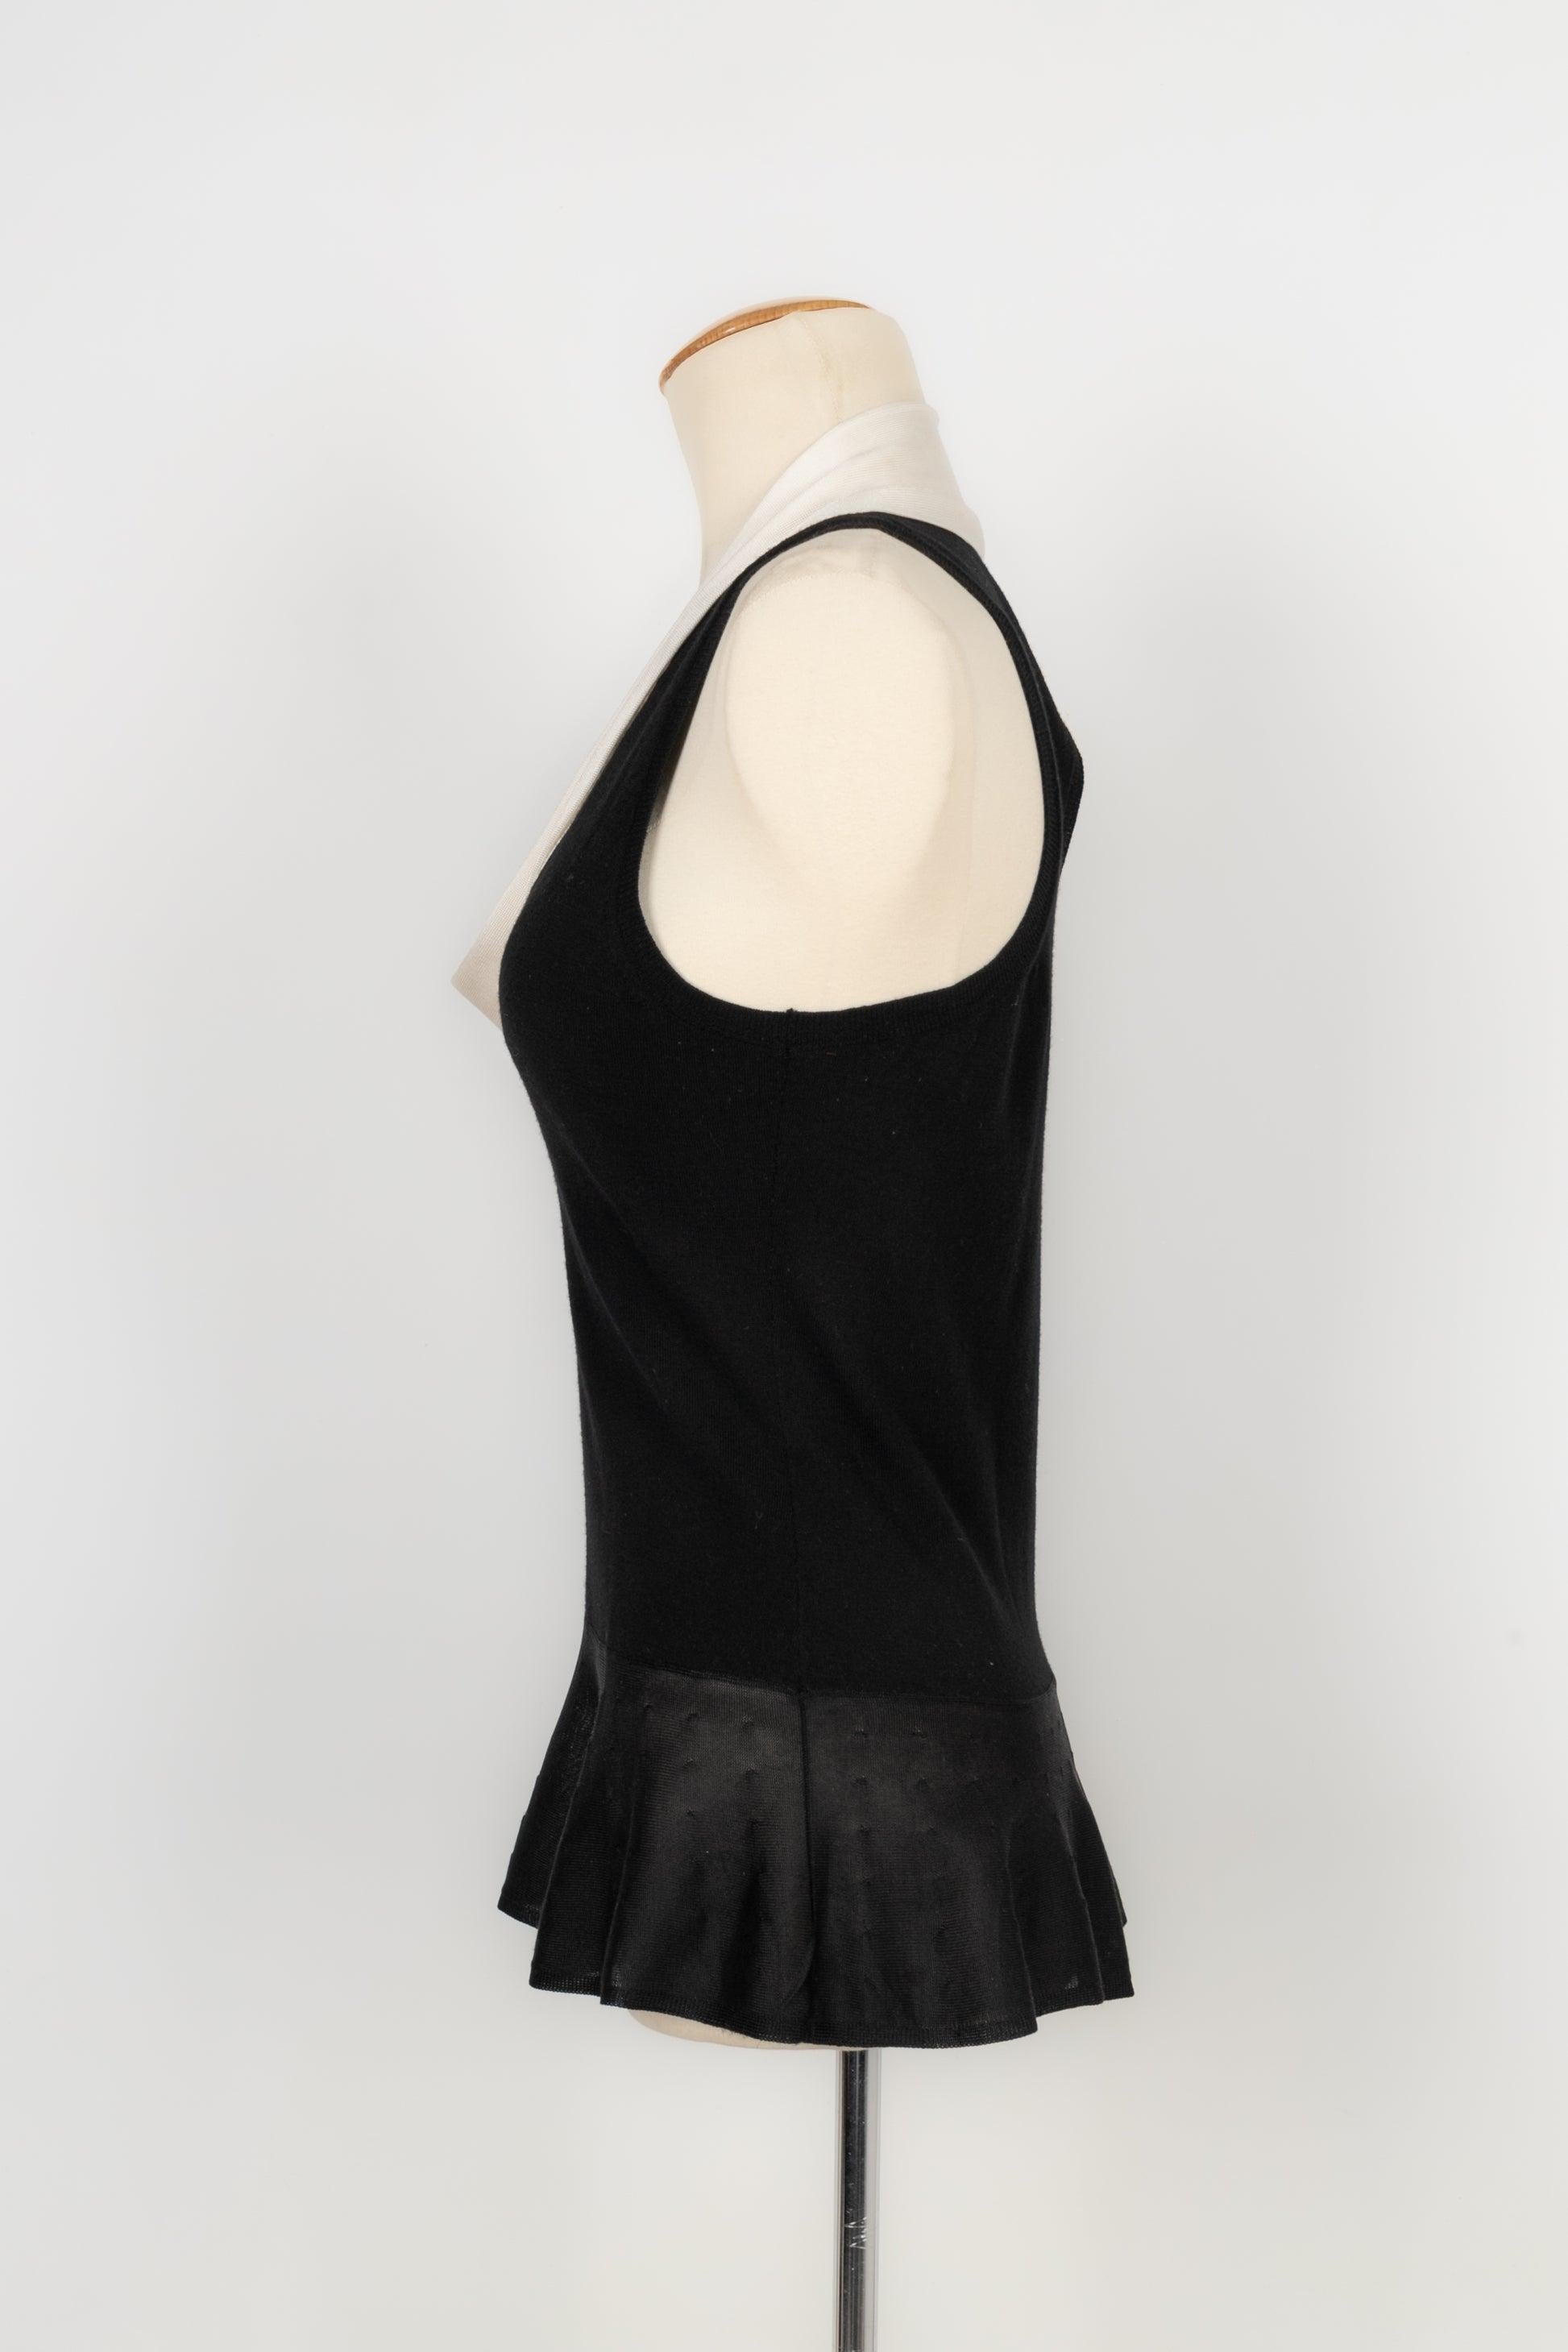 Women's Christian Dior Black Mesh Sleeveless Top For Sale